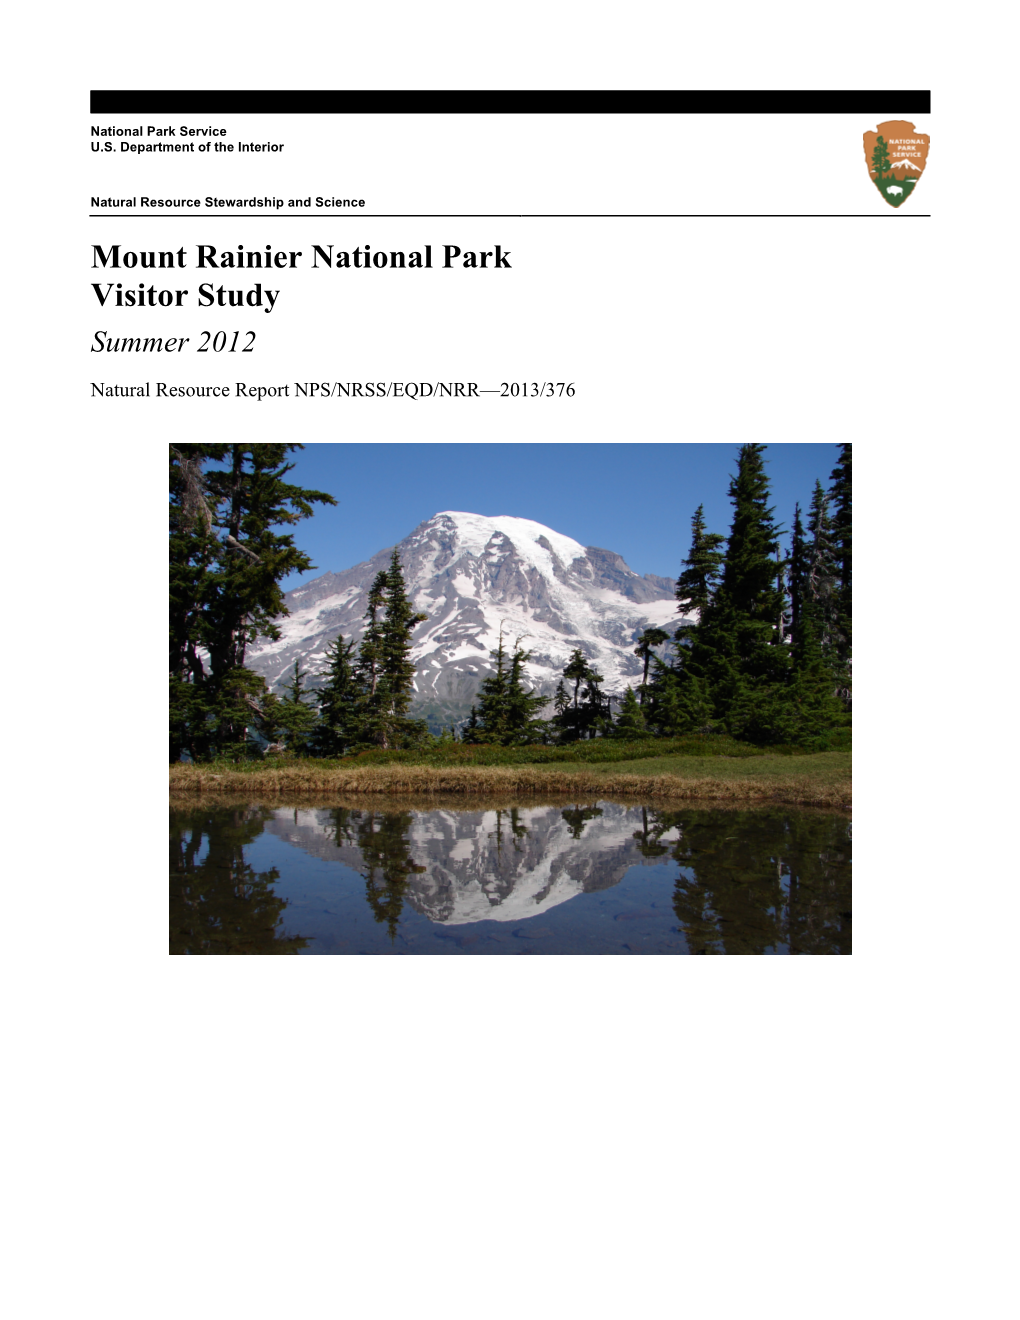 Mount Rainier National Park Visitor Study Summer 2012